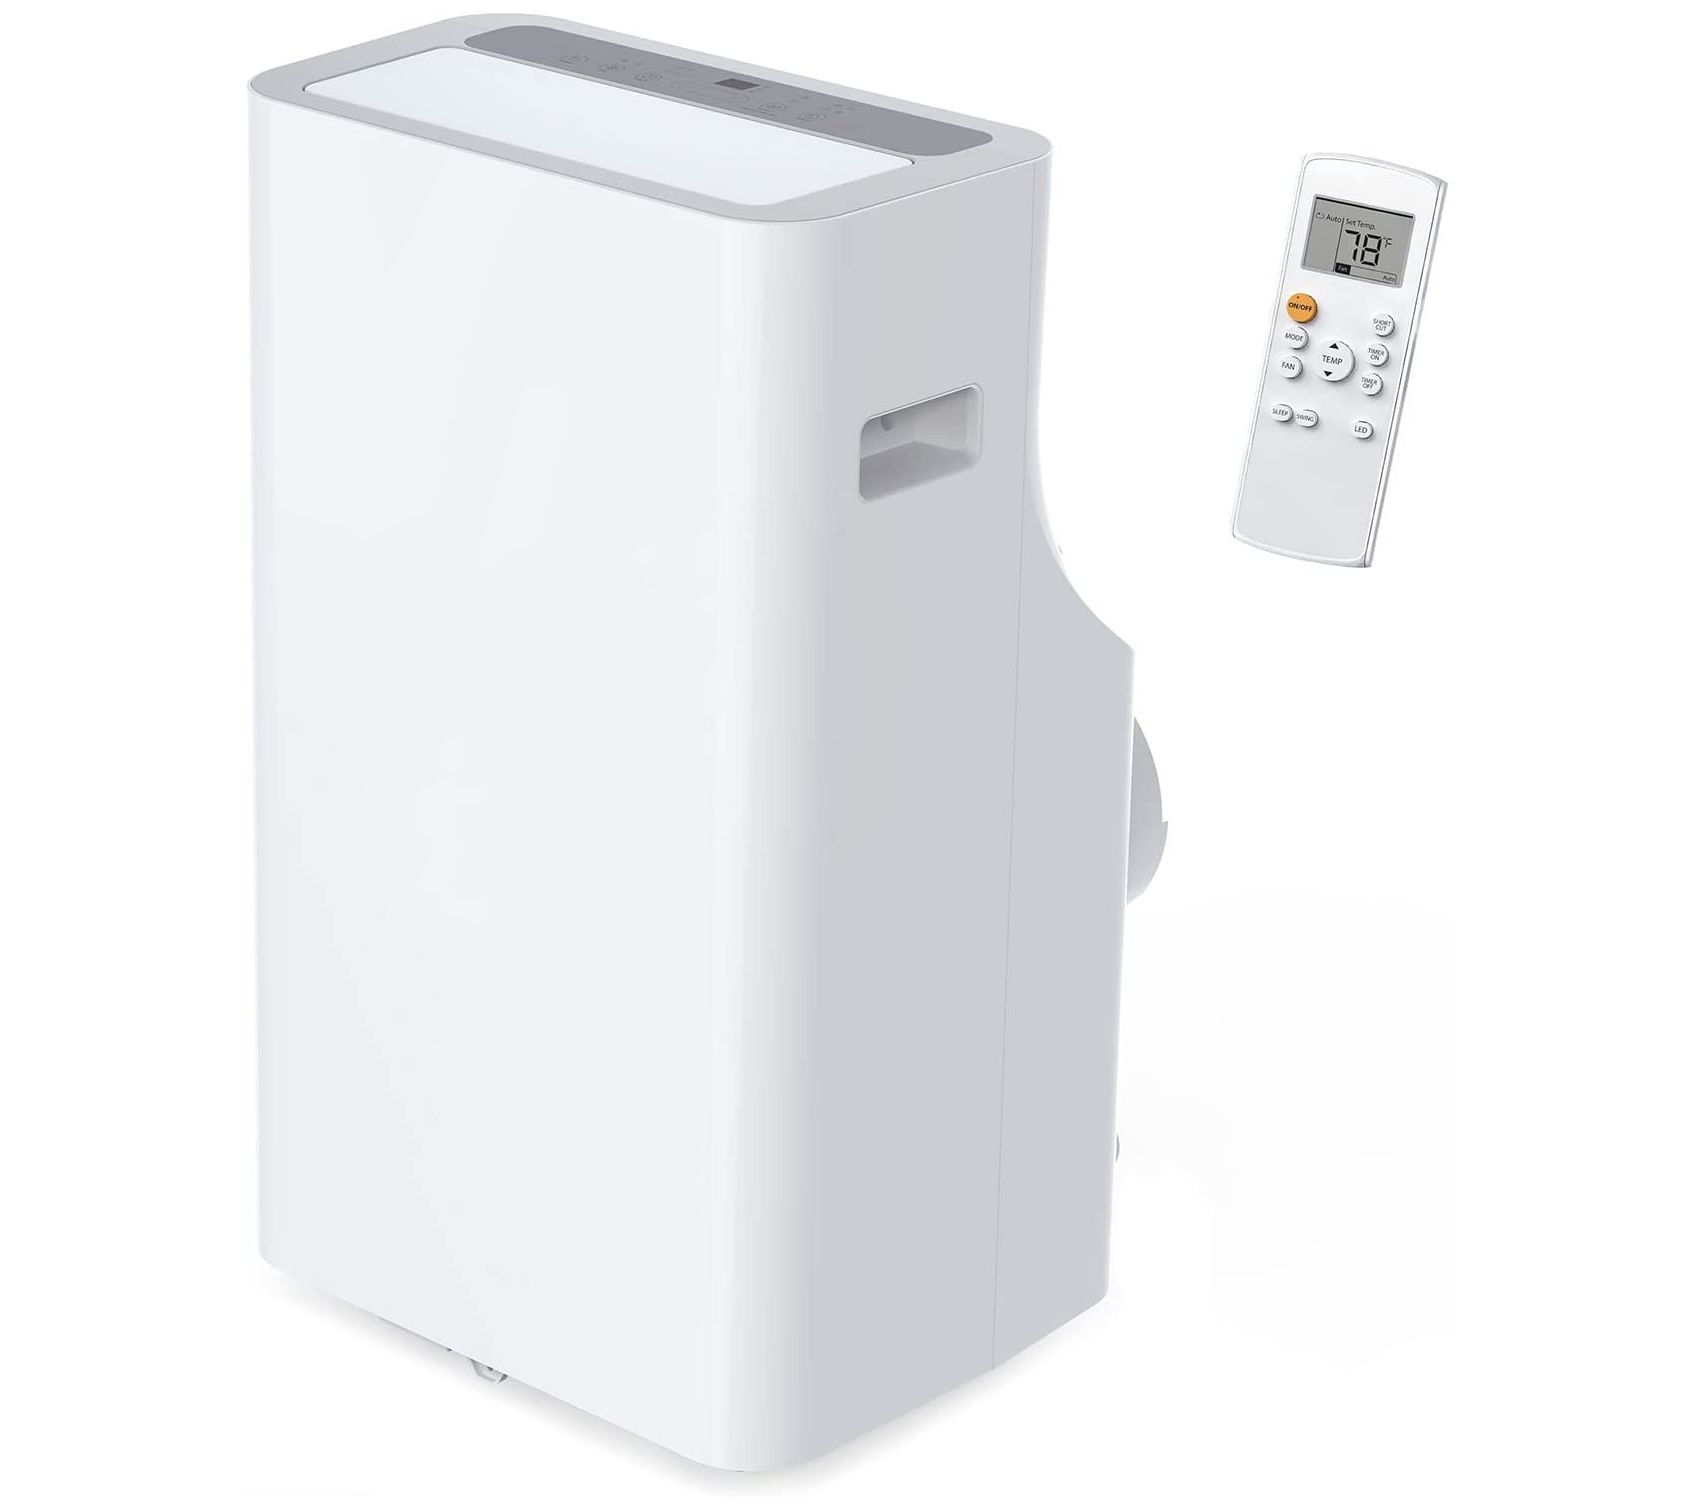 EasyCool 4-in-1 9000BTU/6500DOE Portable Air Conditioner w/Heat